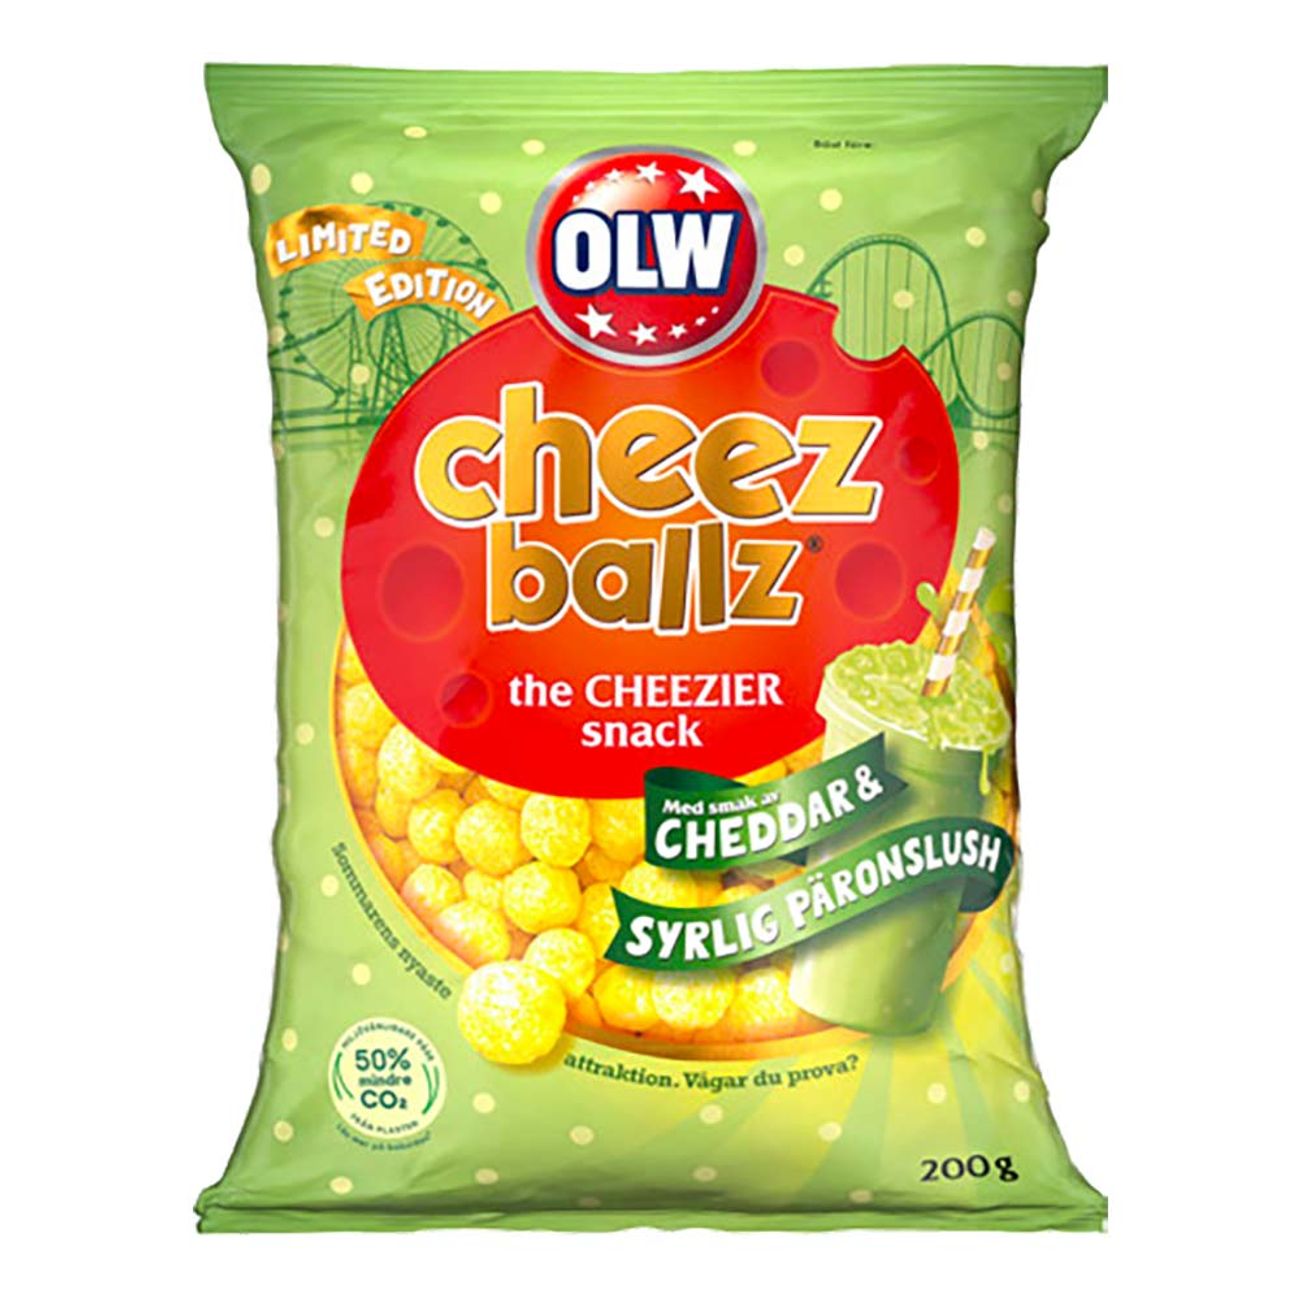 olw-cheez-ballz-cheddar-syrlig-paronslush-94297-1